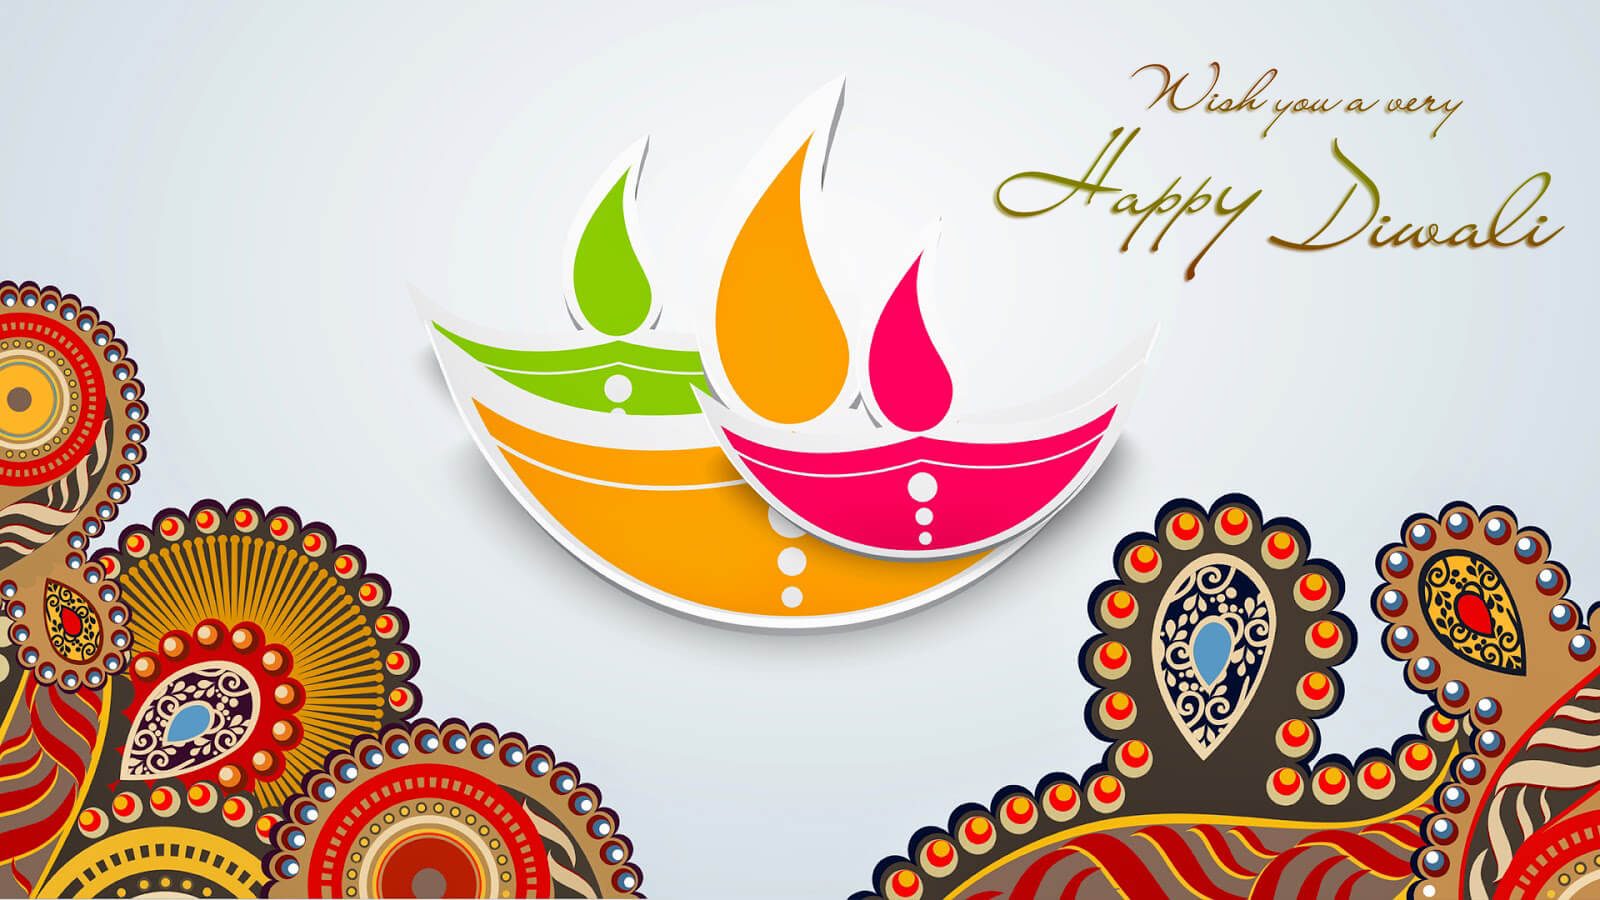 Download-Happy-Diwali-2015-HD-Wallpapers-facebook-mobile-desktop-cgfrog-24